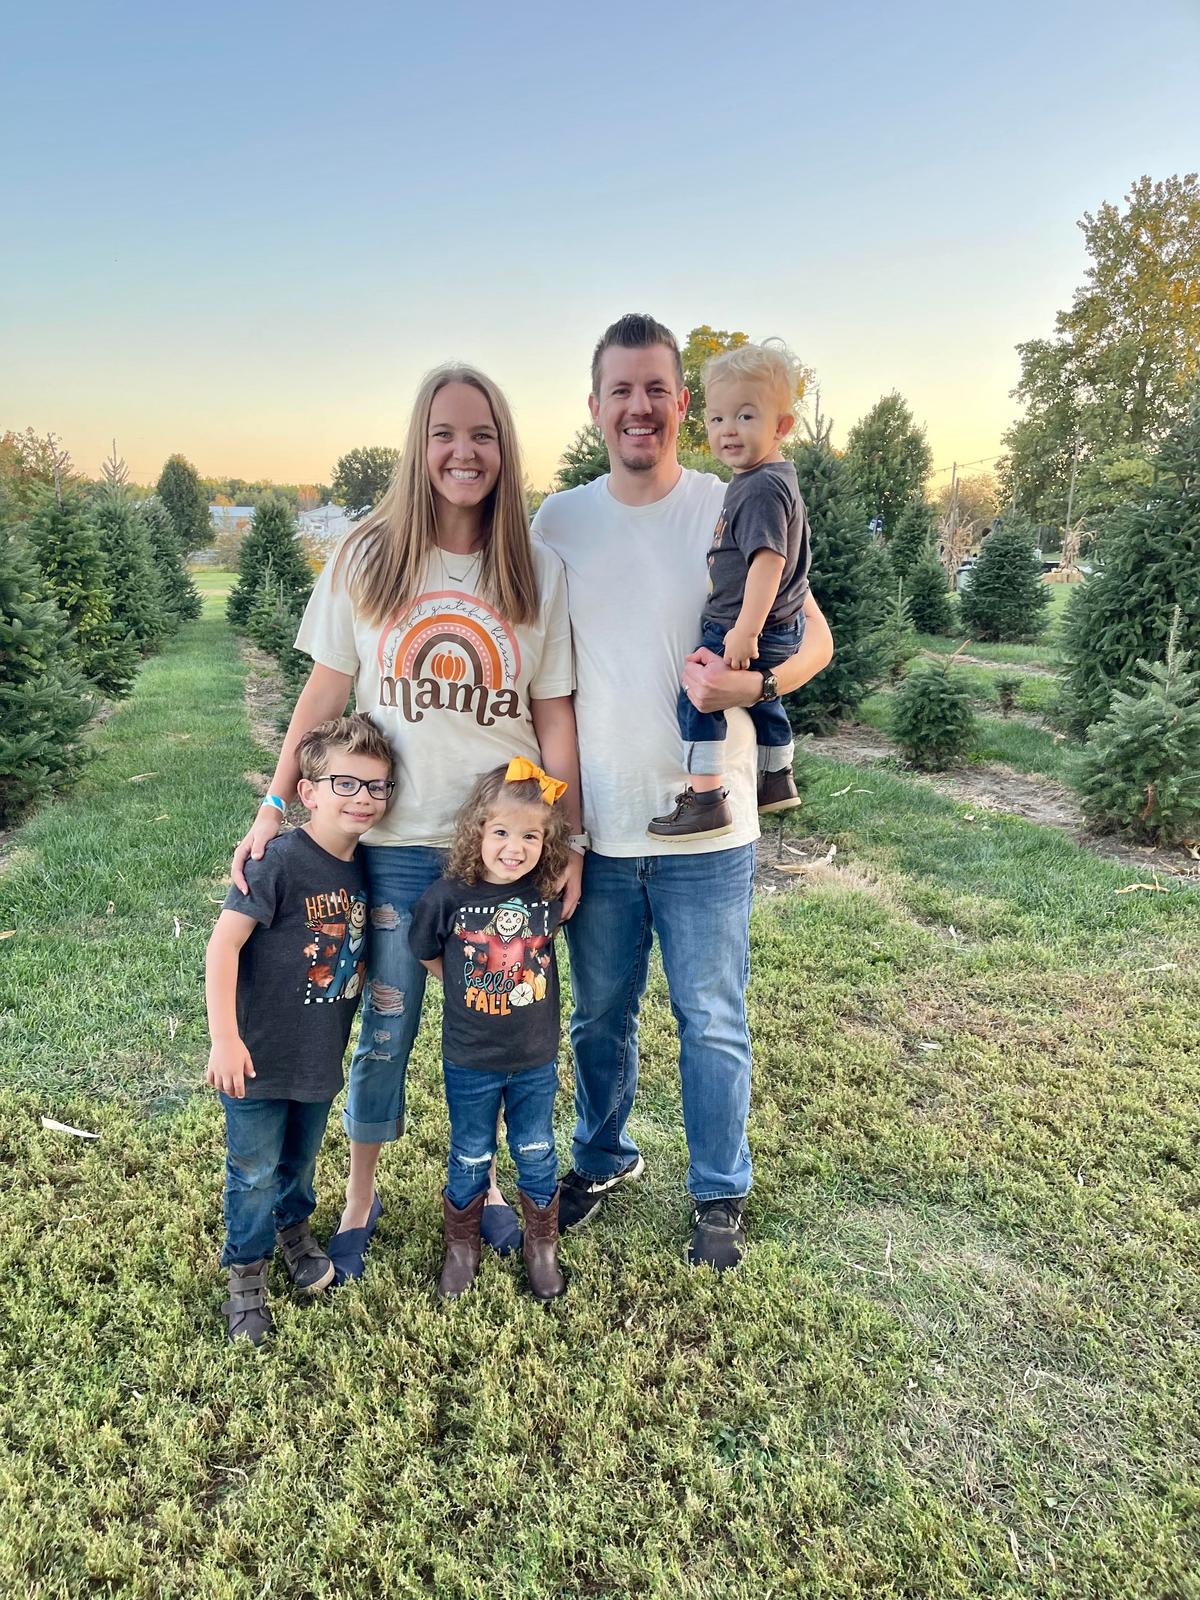 Rebekah Van Scoy, her husband Taylor, and the three children. (Courtesy of <a href="https://www.instagram.com/rebekahsfamily/">Rebekah Van Scoy</a>)